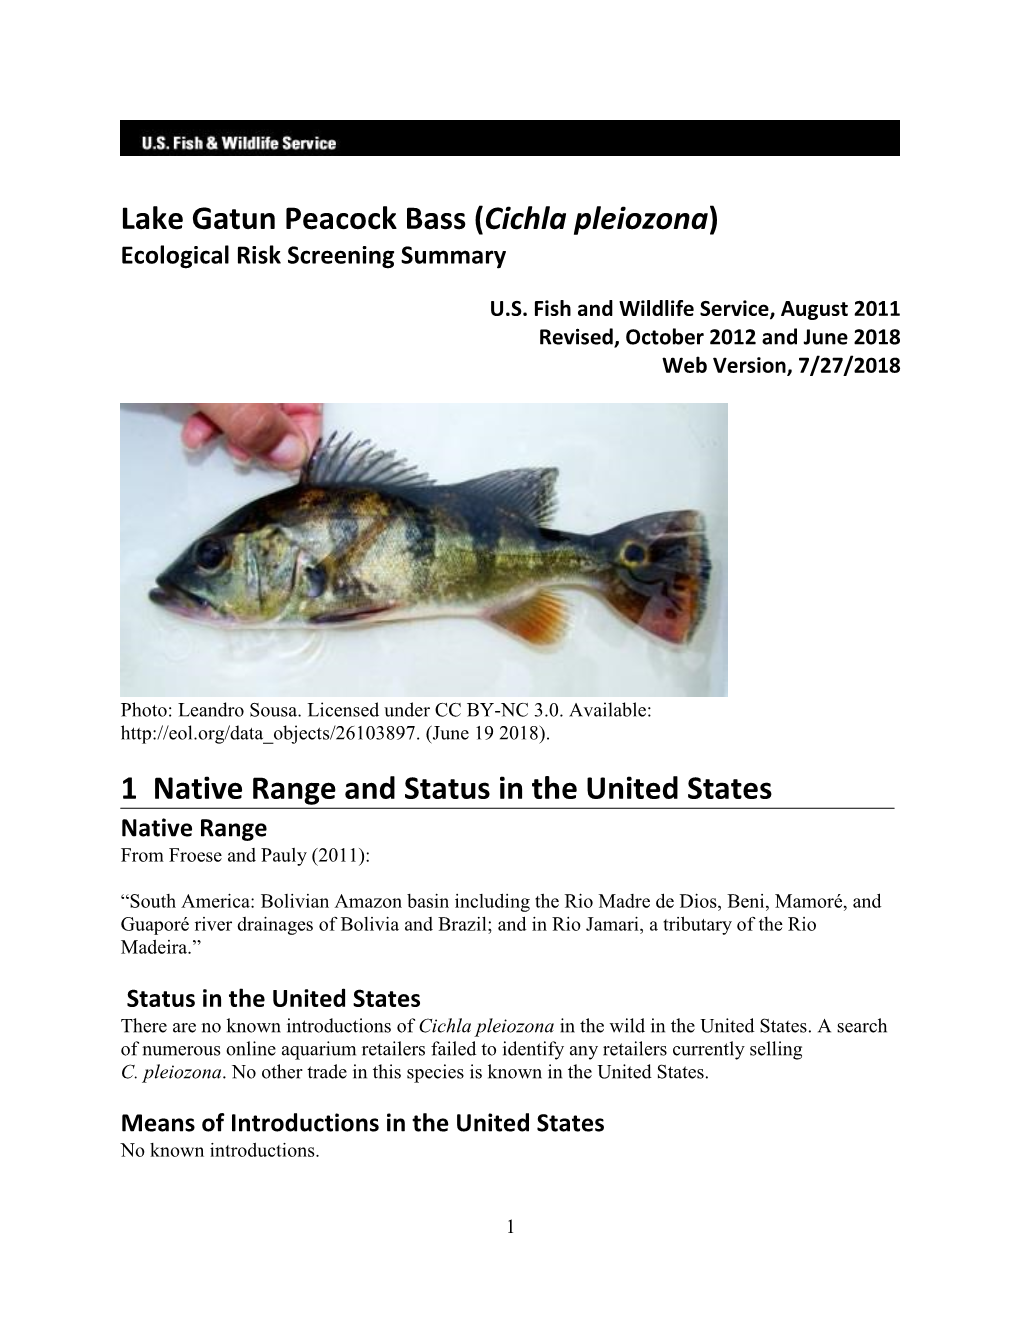 Lake Gatun Peacock Bass (Cichla Pleiozona) Ecological Risk Screening Summary